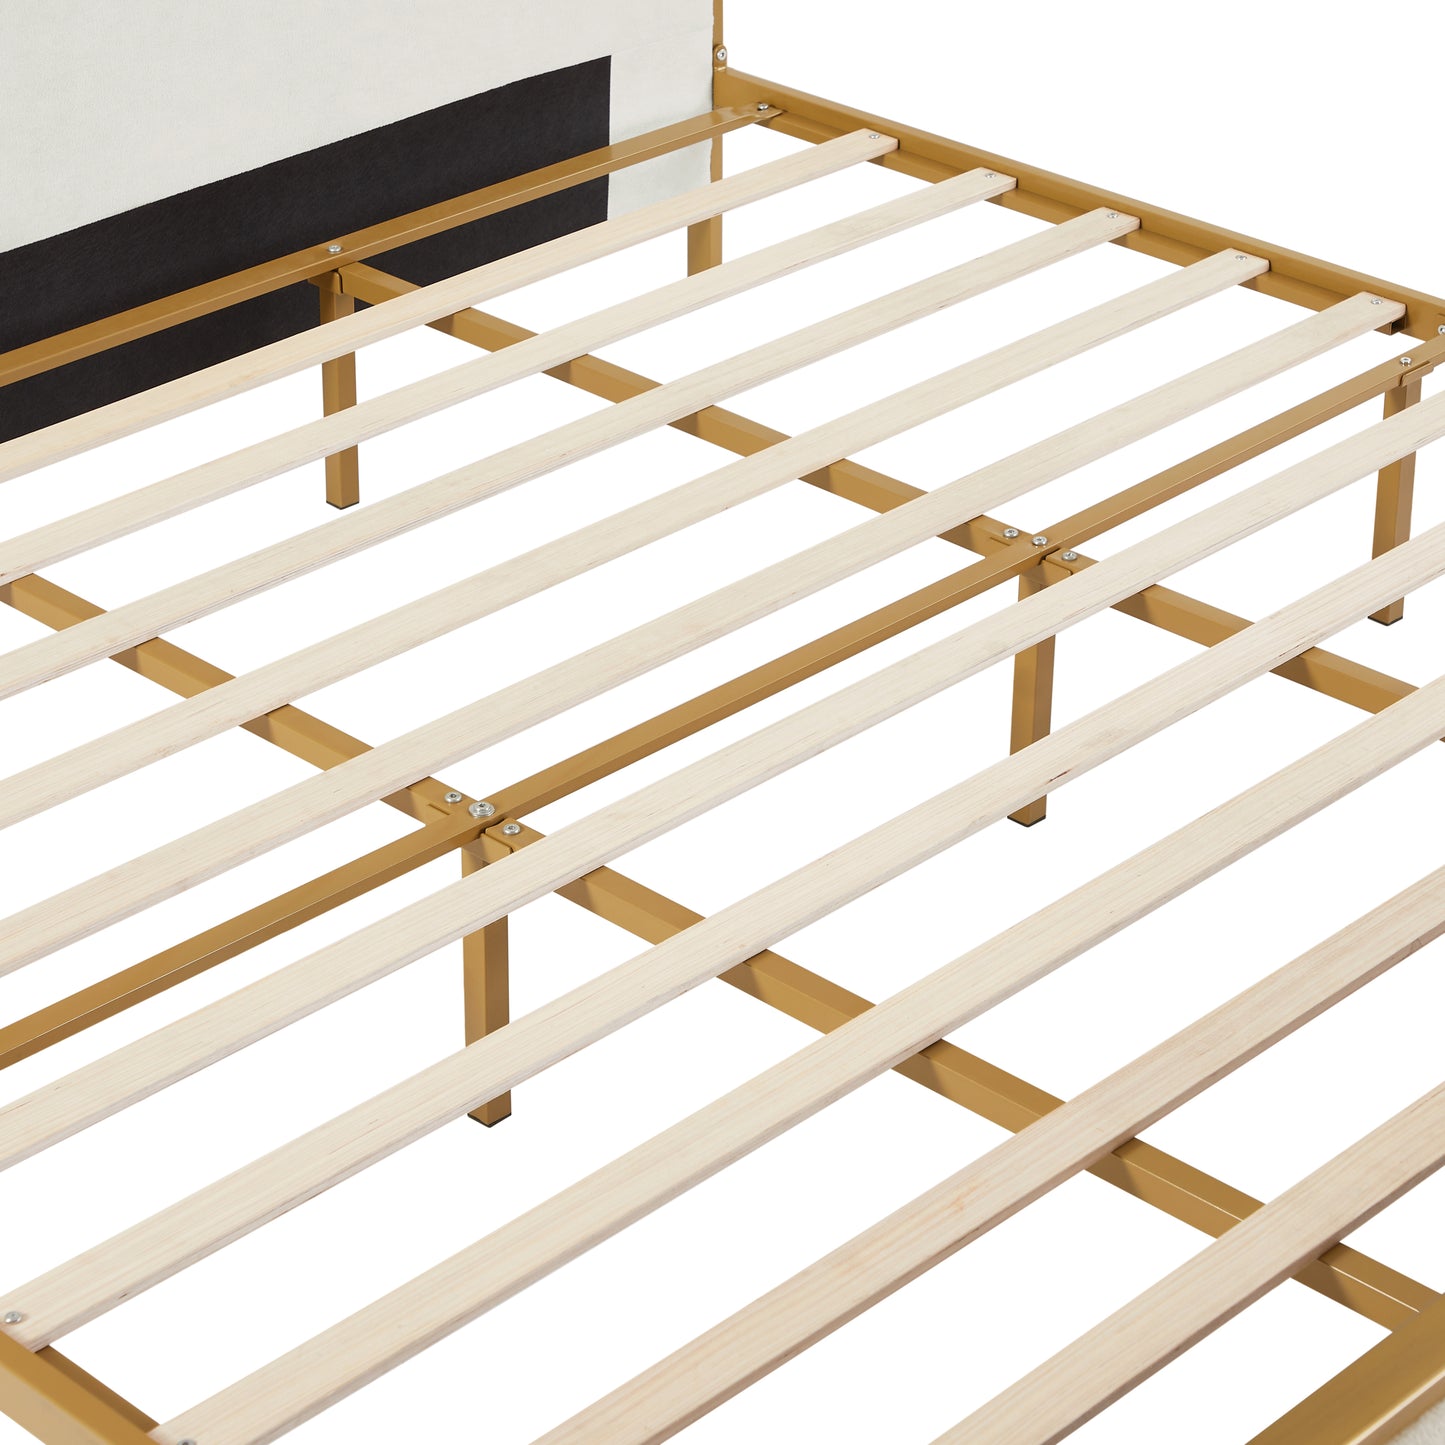 King Size Bed Frame,Upholstered Platform Bed & High headboard with Wood Slat Support,No Box Spring Needed,Easy Assembly, Velvet White